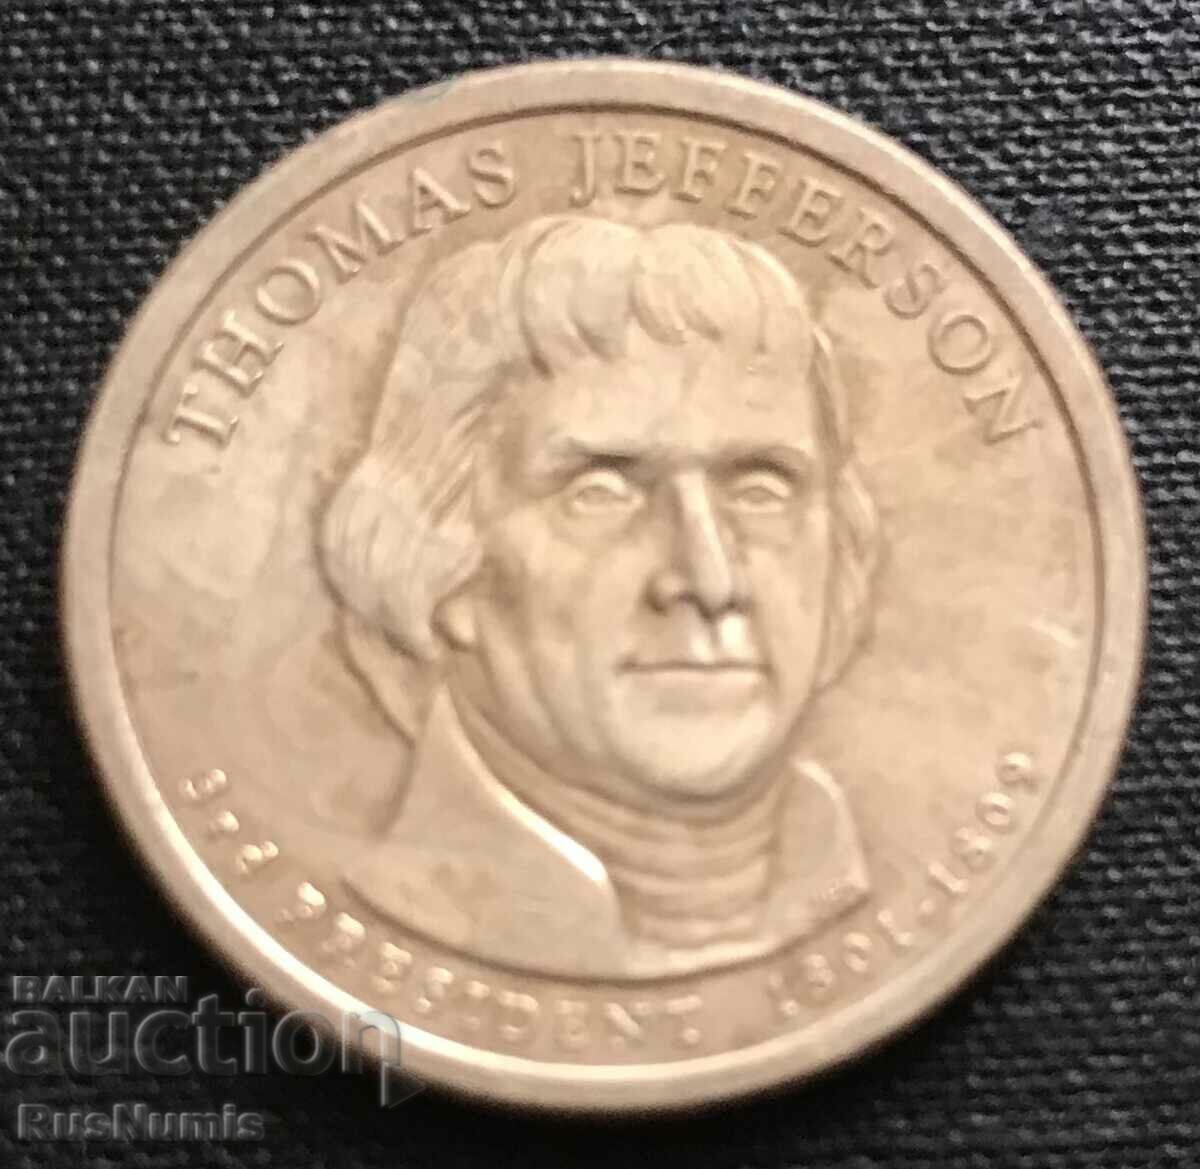 STATELE UNITE ALE AMERICII. 1 dolar 2007(P). Thomas Jefferson.